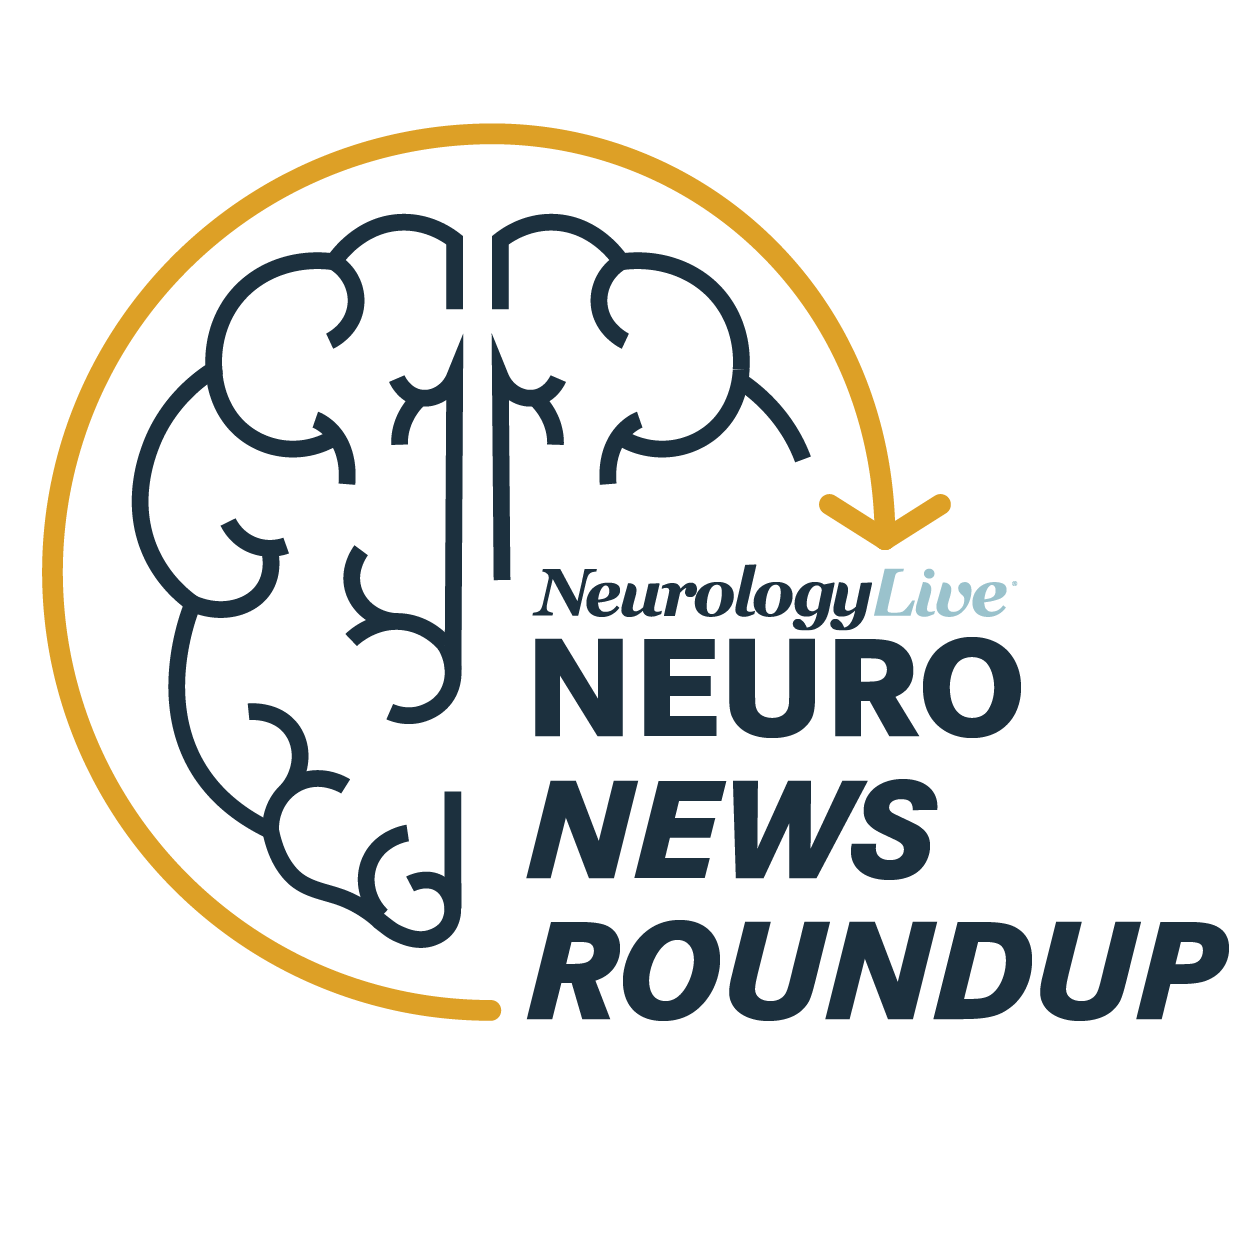 Top News for Duchenne Muscular Dystrophy Awareness Week